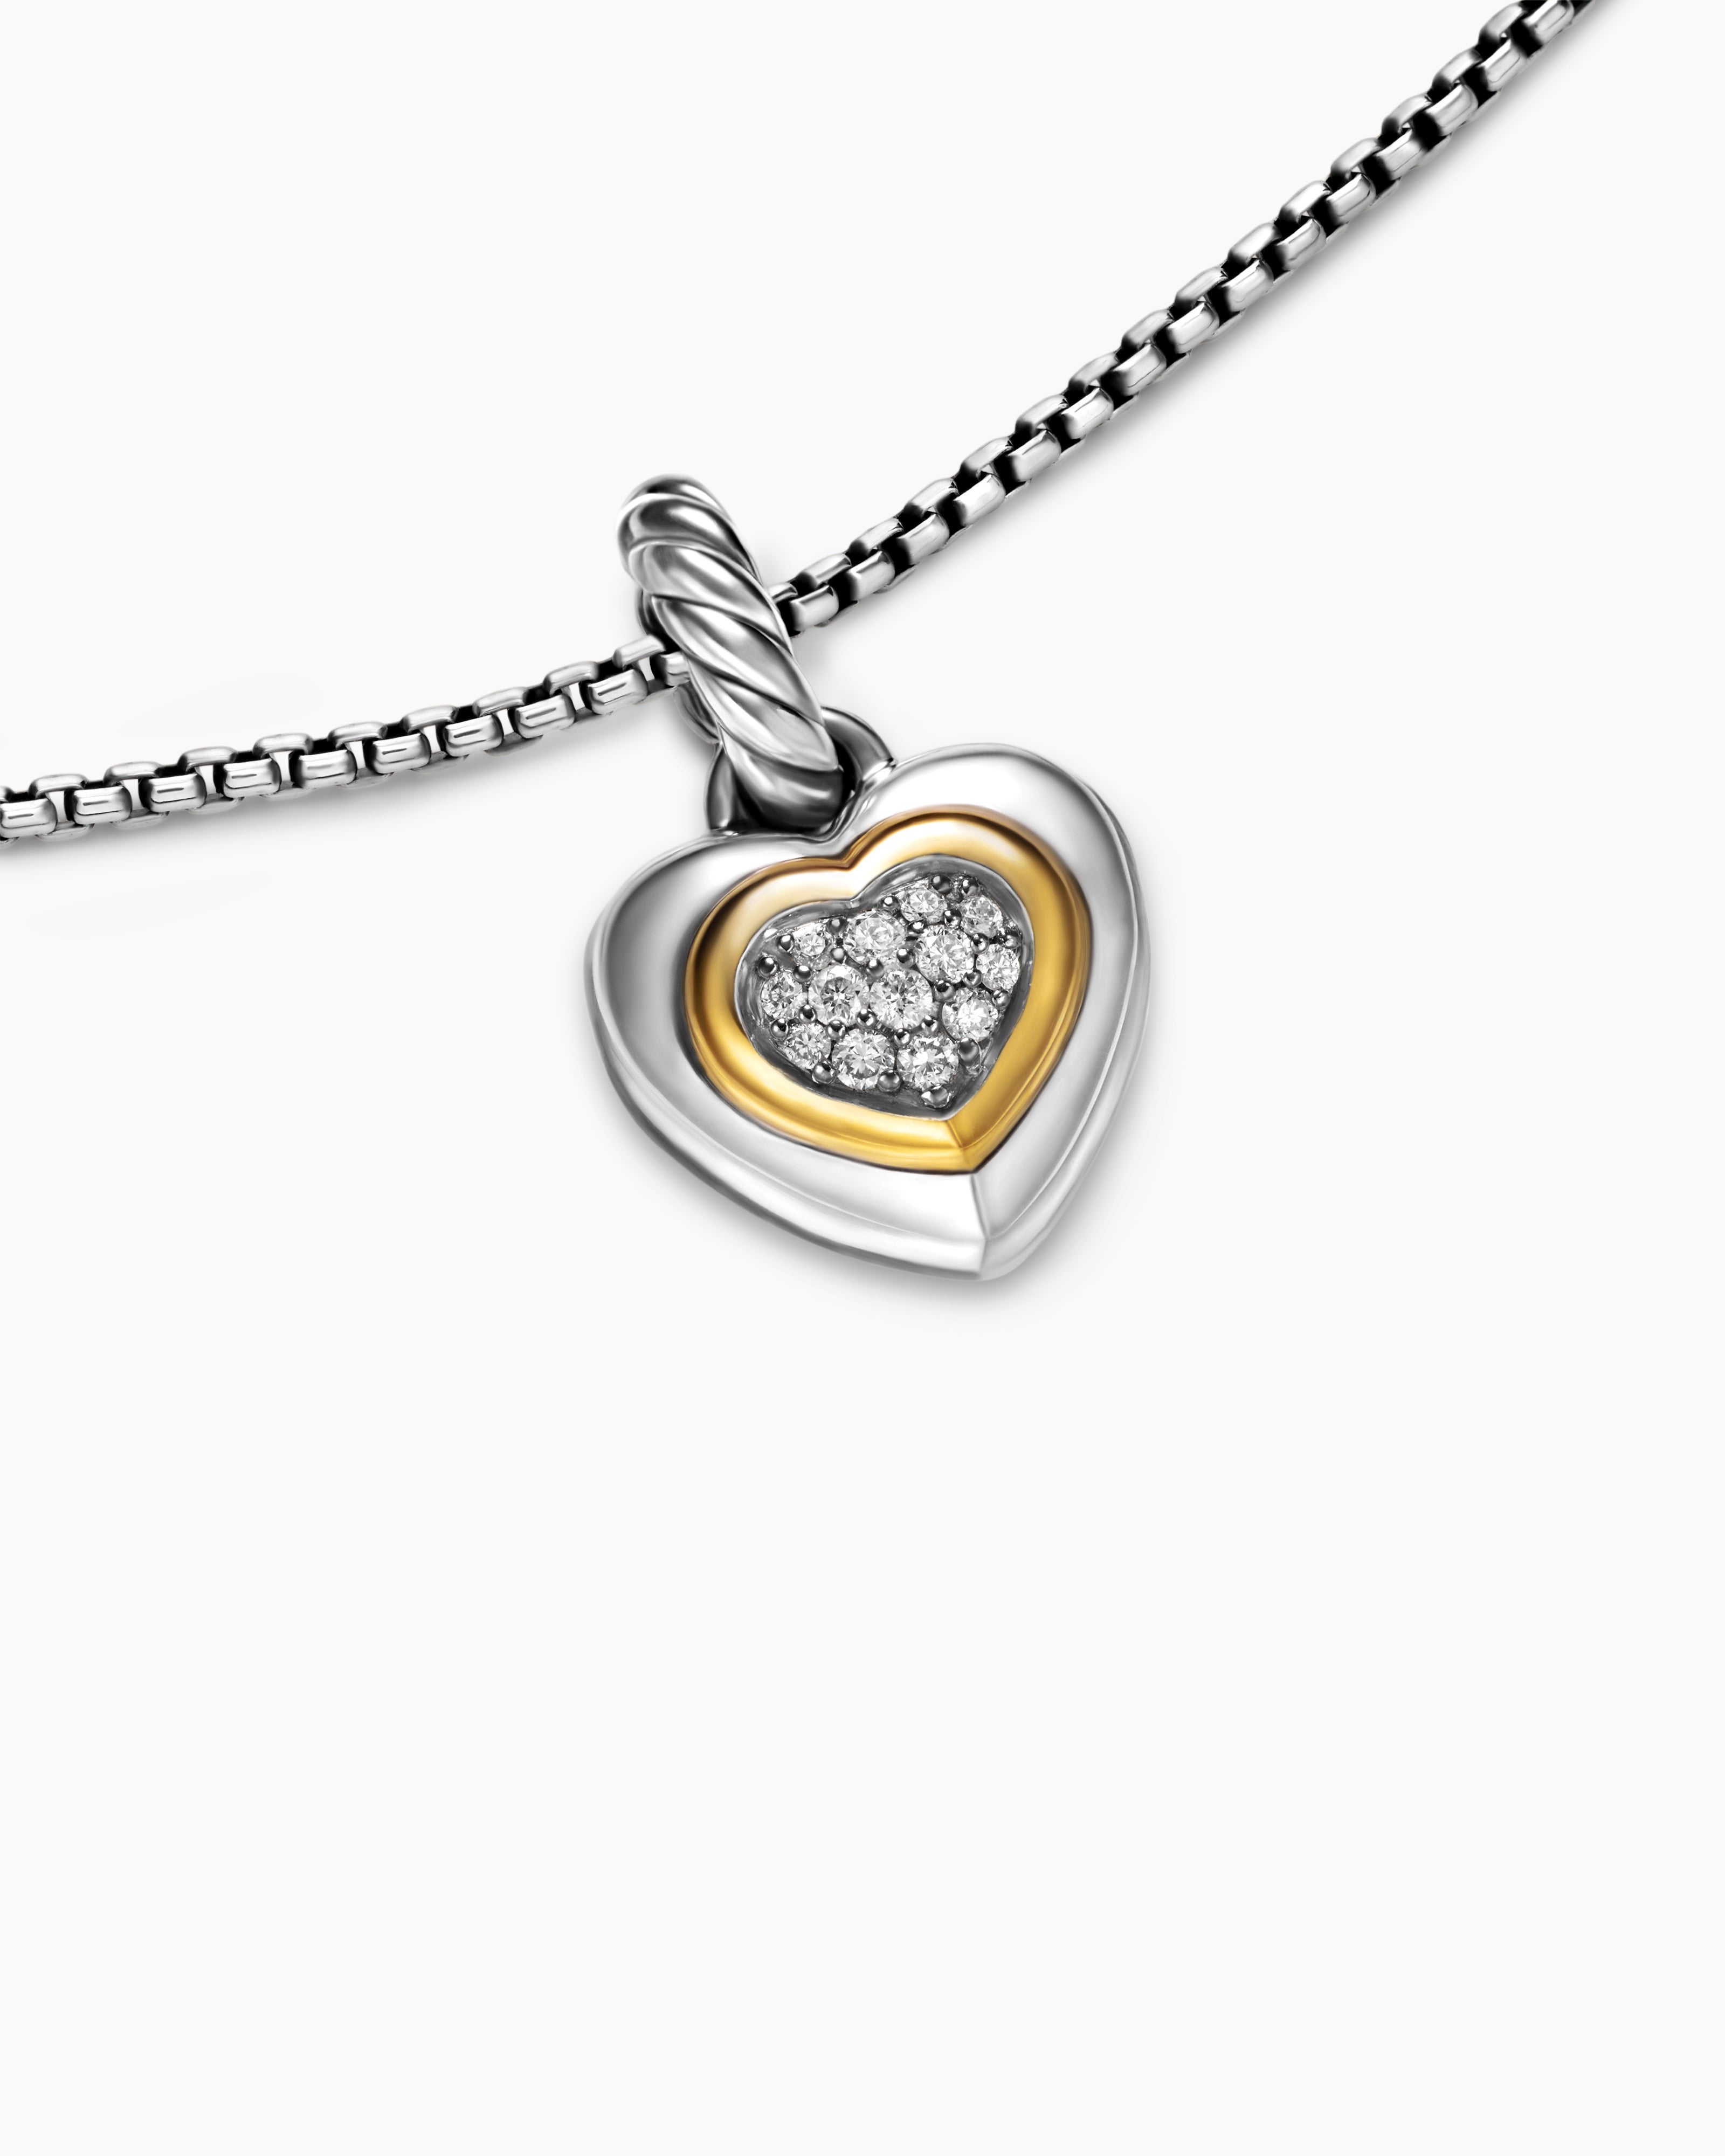 Amazon.com: Paialco Heart Shape Locket Pendant Necklace for Love Memory  Photo Keeping, 18